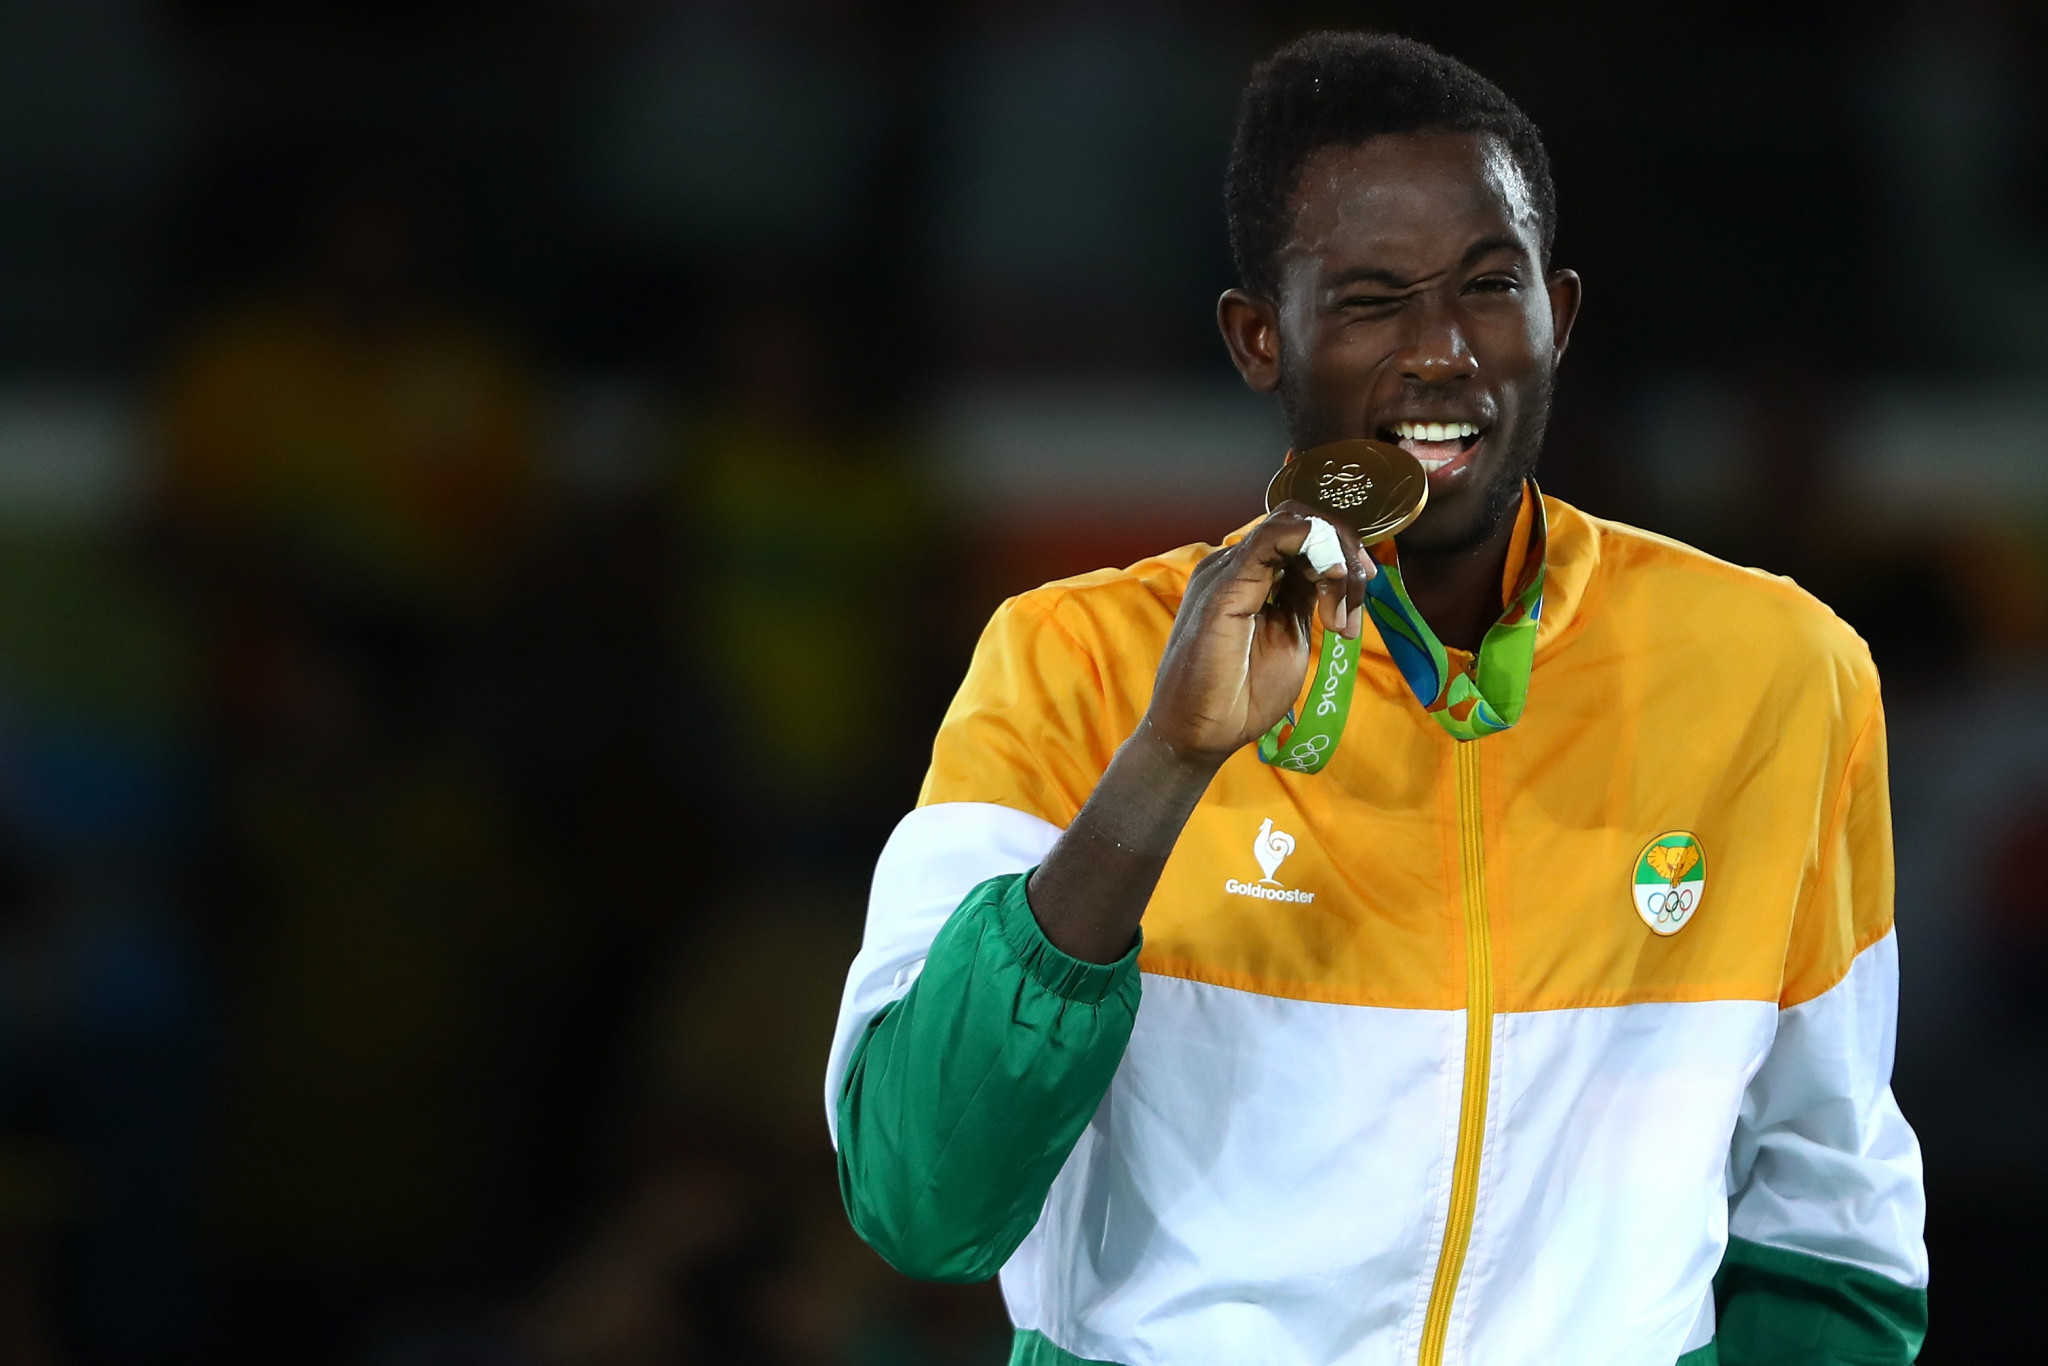 Cheick Sallah Cissé won taekwondo gold for the Ivory Coast at Rio 2016 ©Getty Images